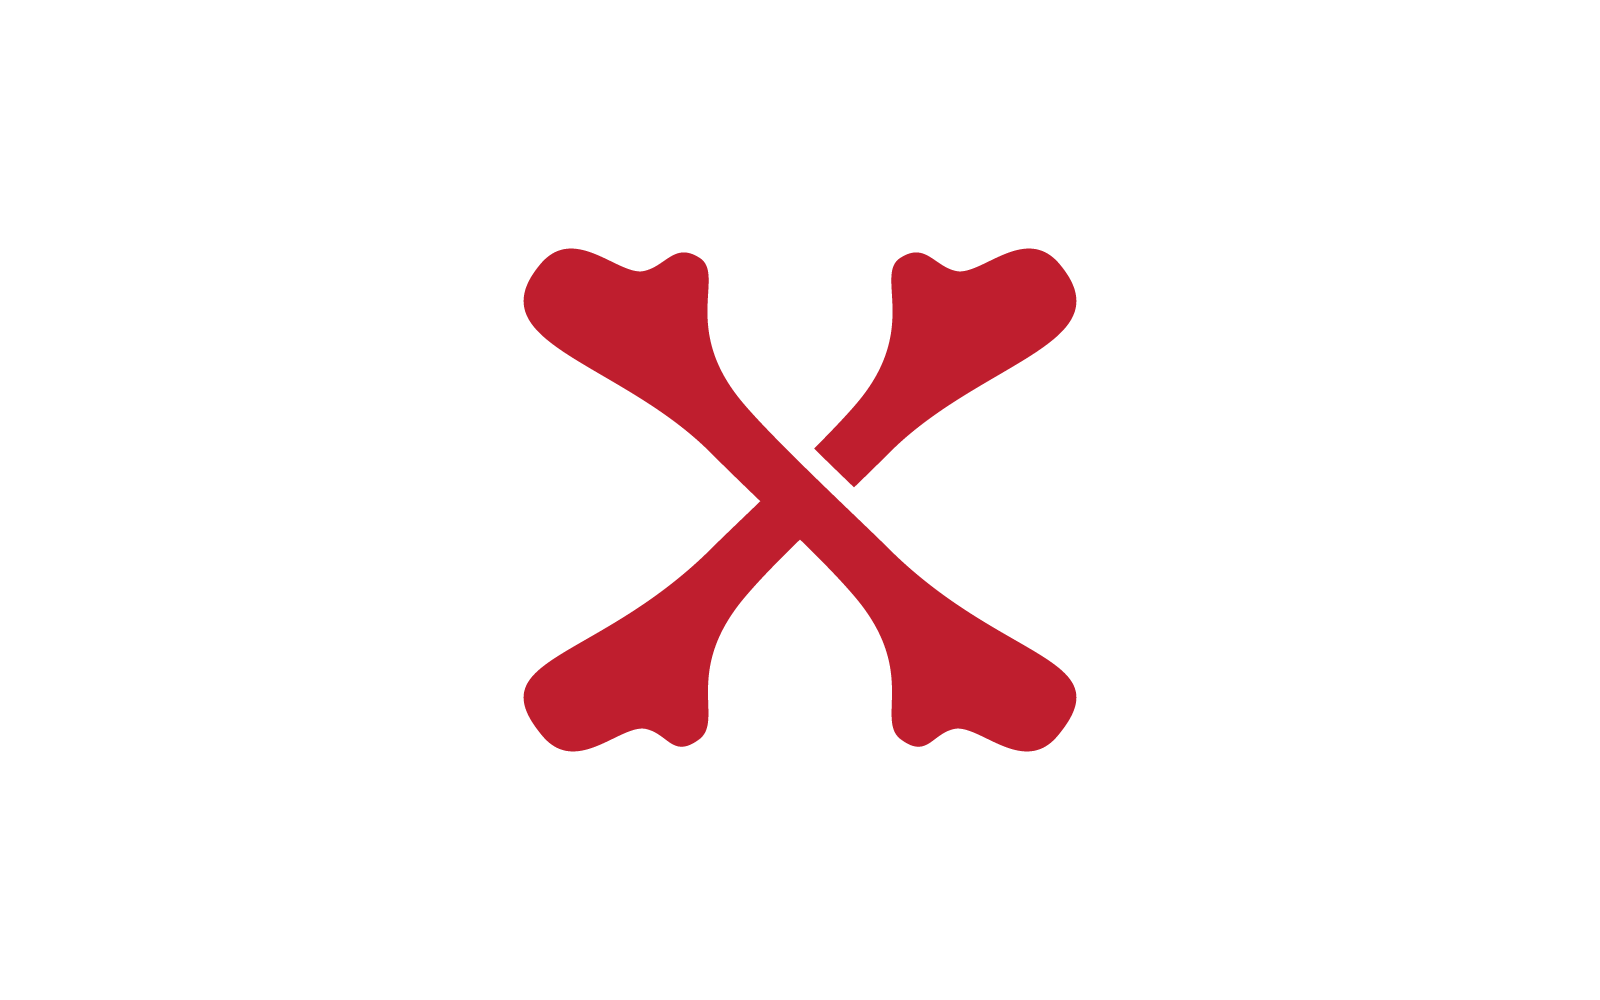 Crossbone ilustracja logo ikona wektor płaski szablon projektu